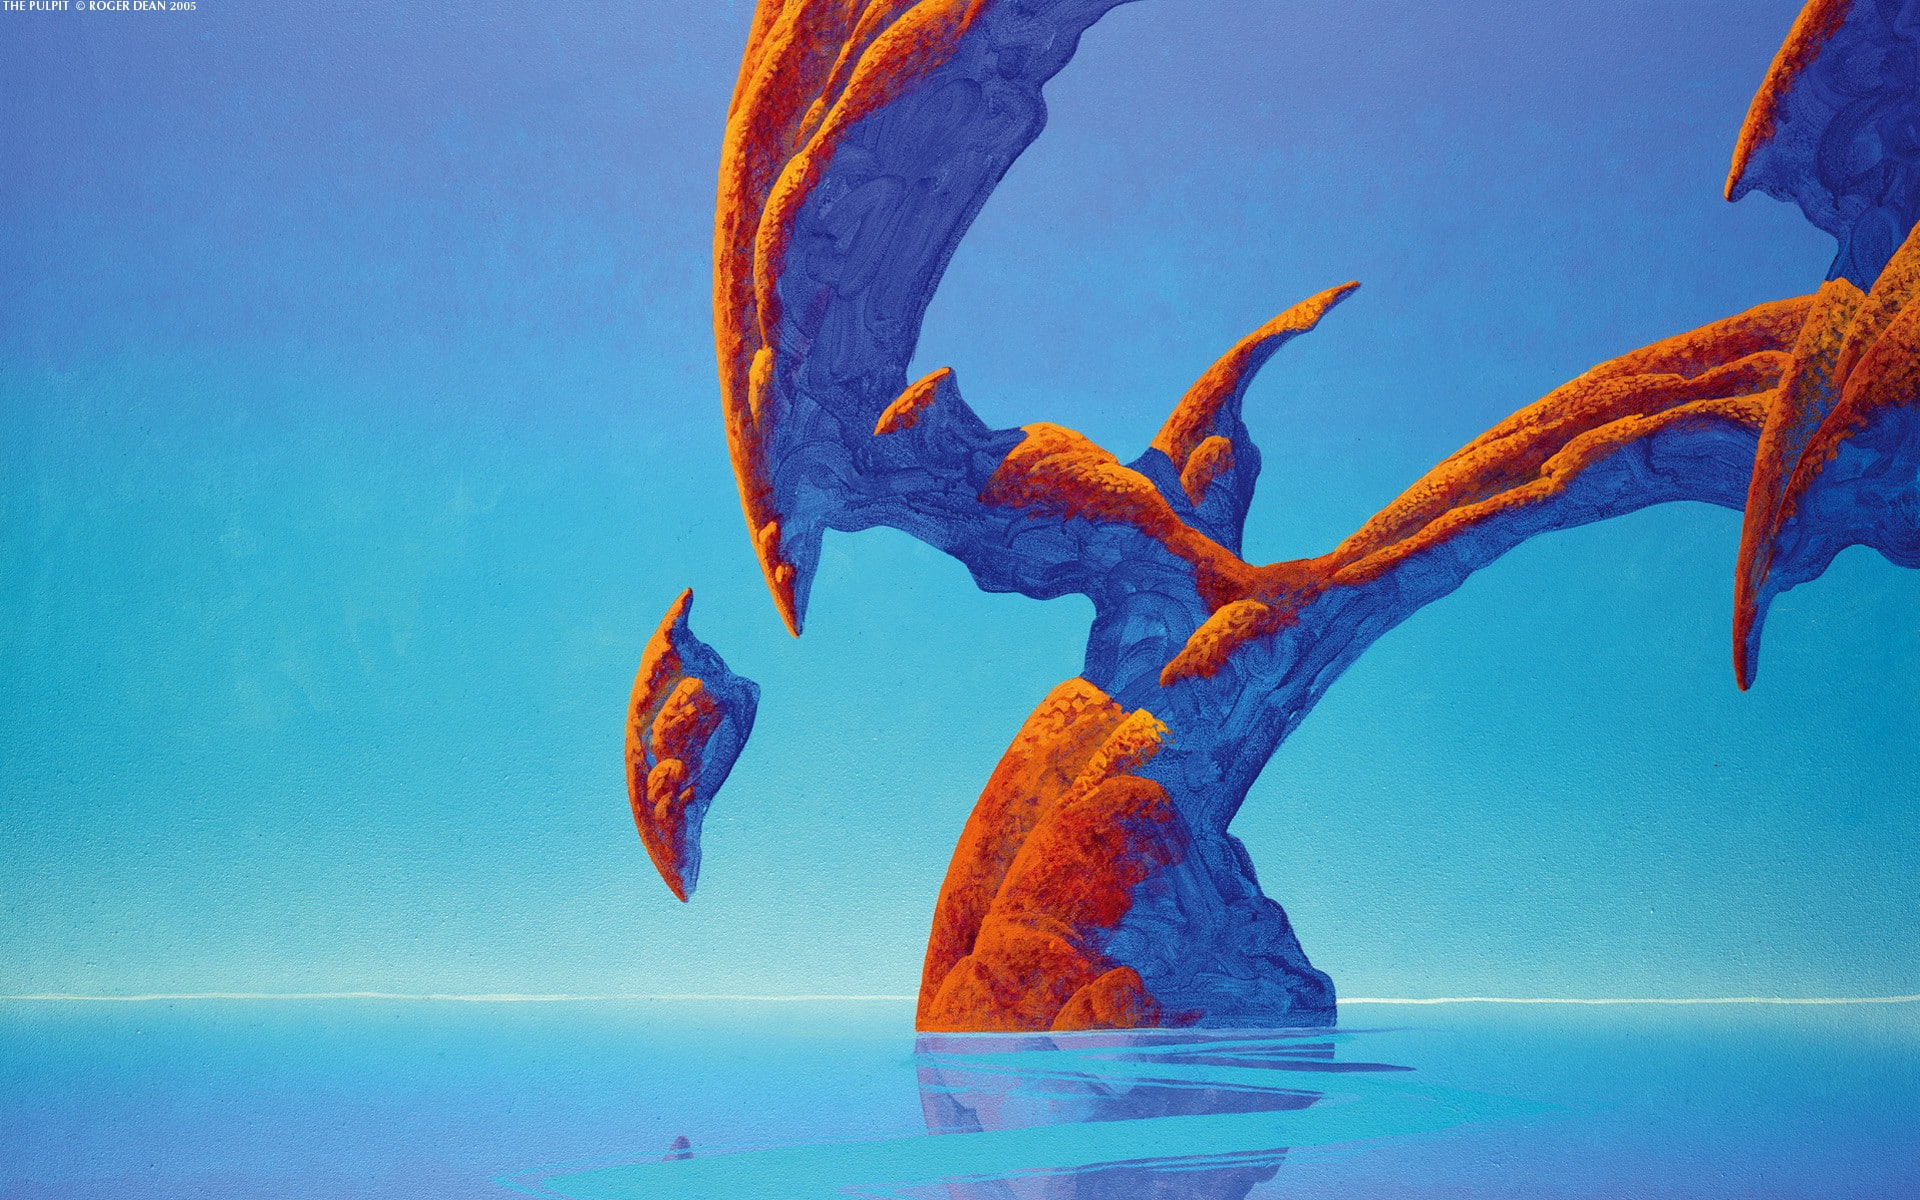 Roger Dean, rock formation, fantasy art, sea, water, blue, nature